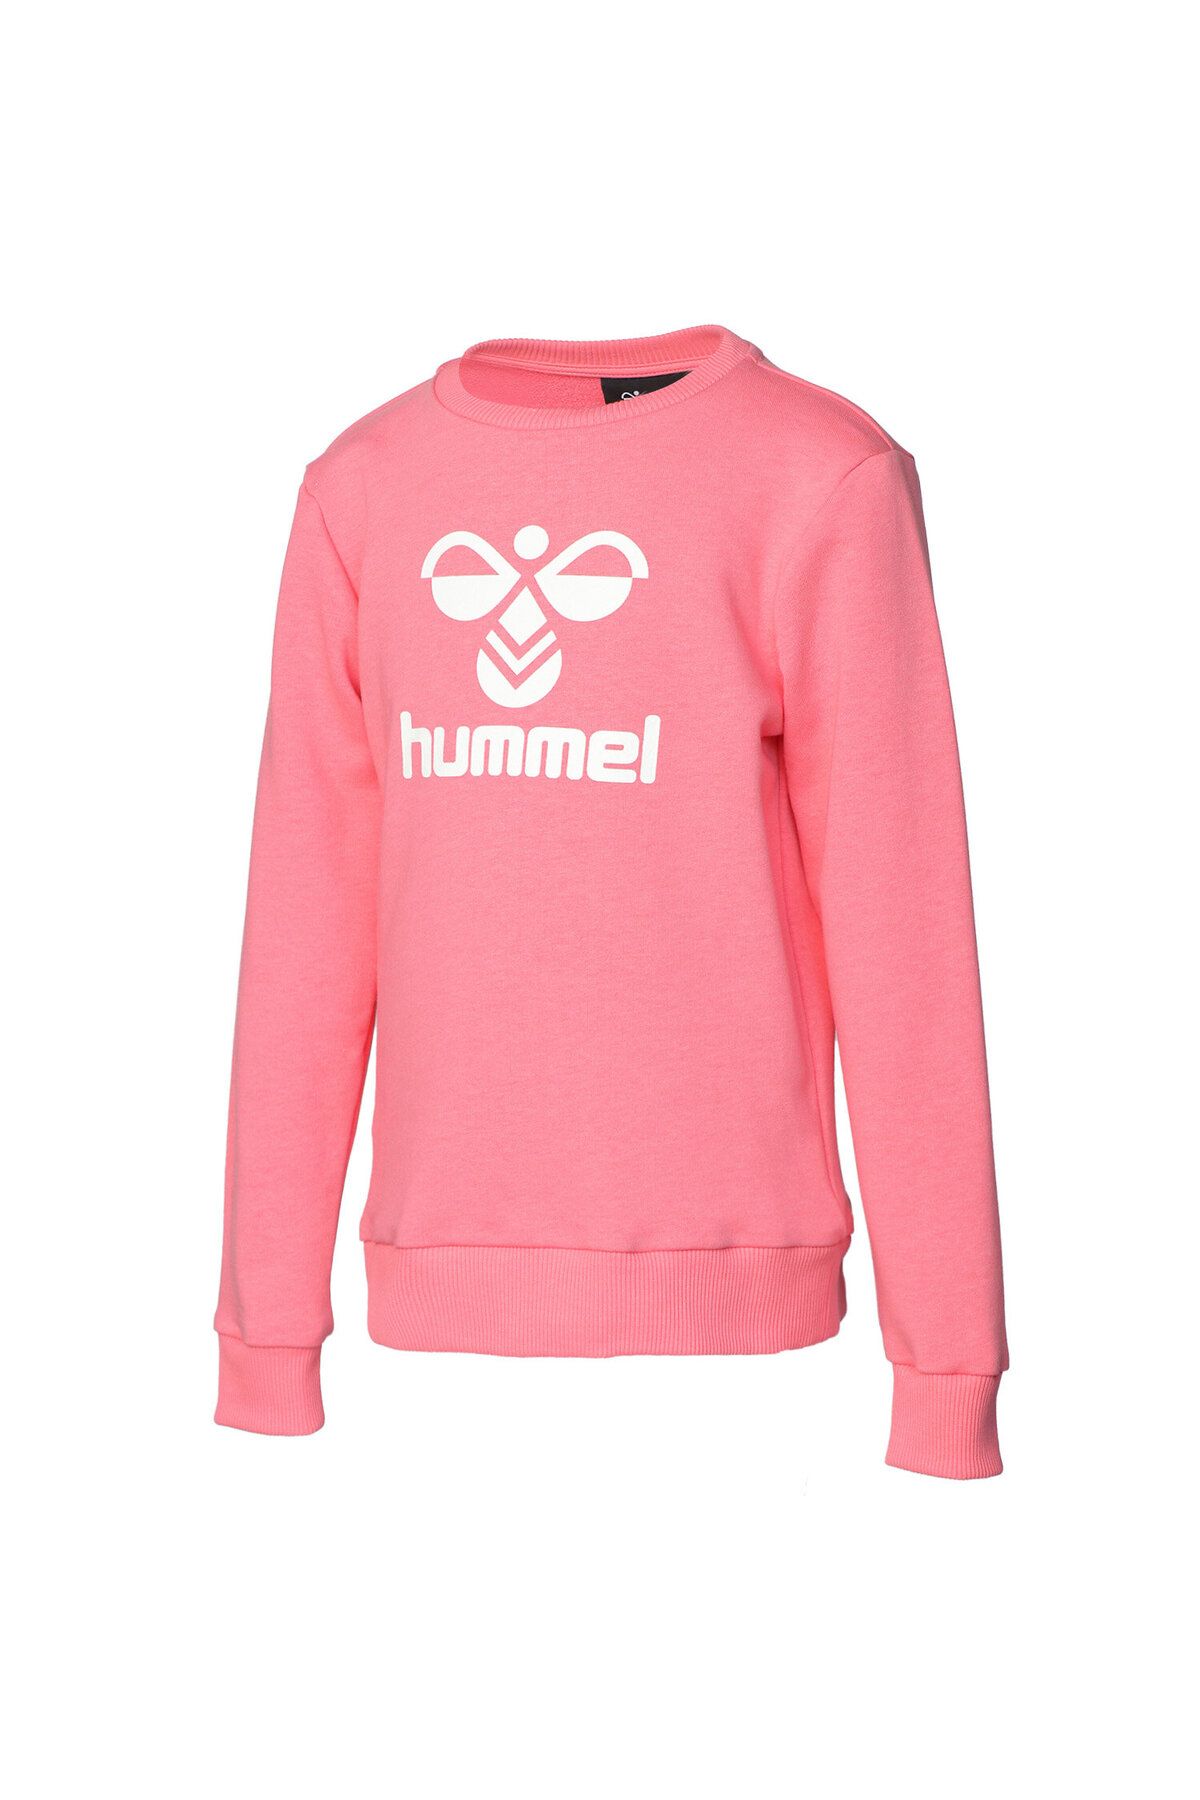 hummel Girls Artemis Pink Sweatshirt 921585-2224